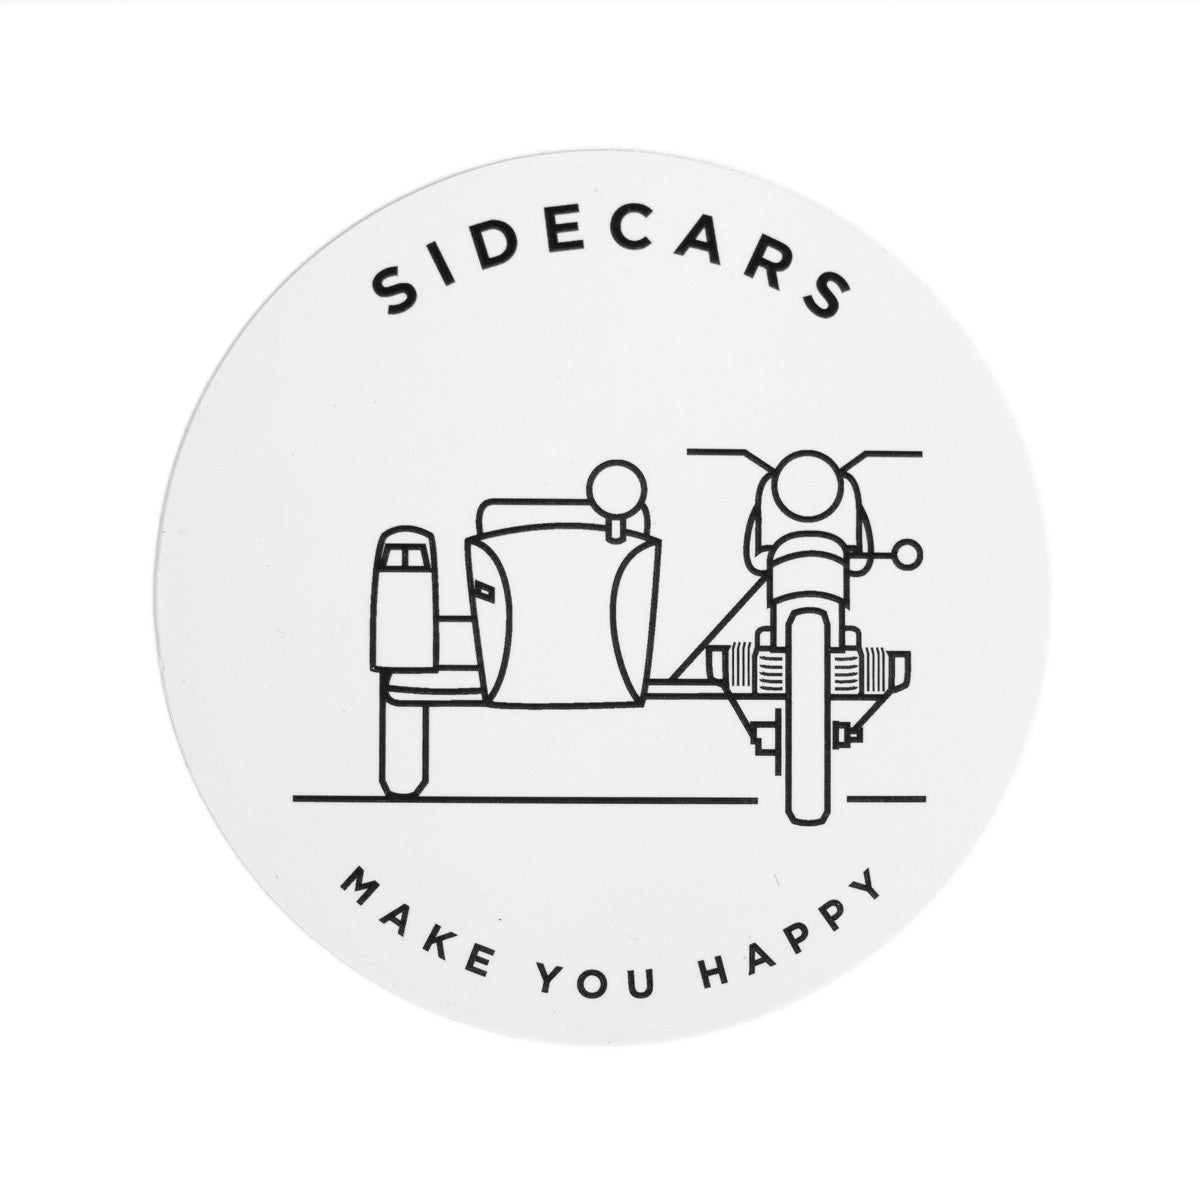 Sidecars Make You Happy Sticker